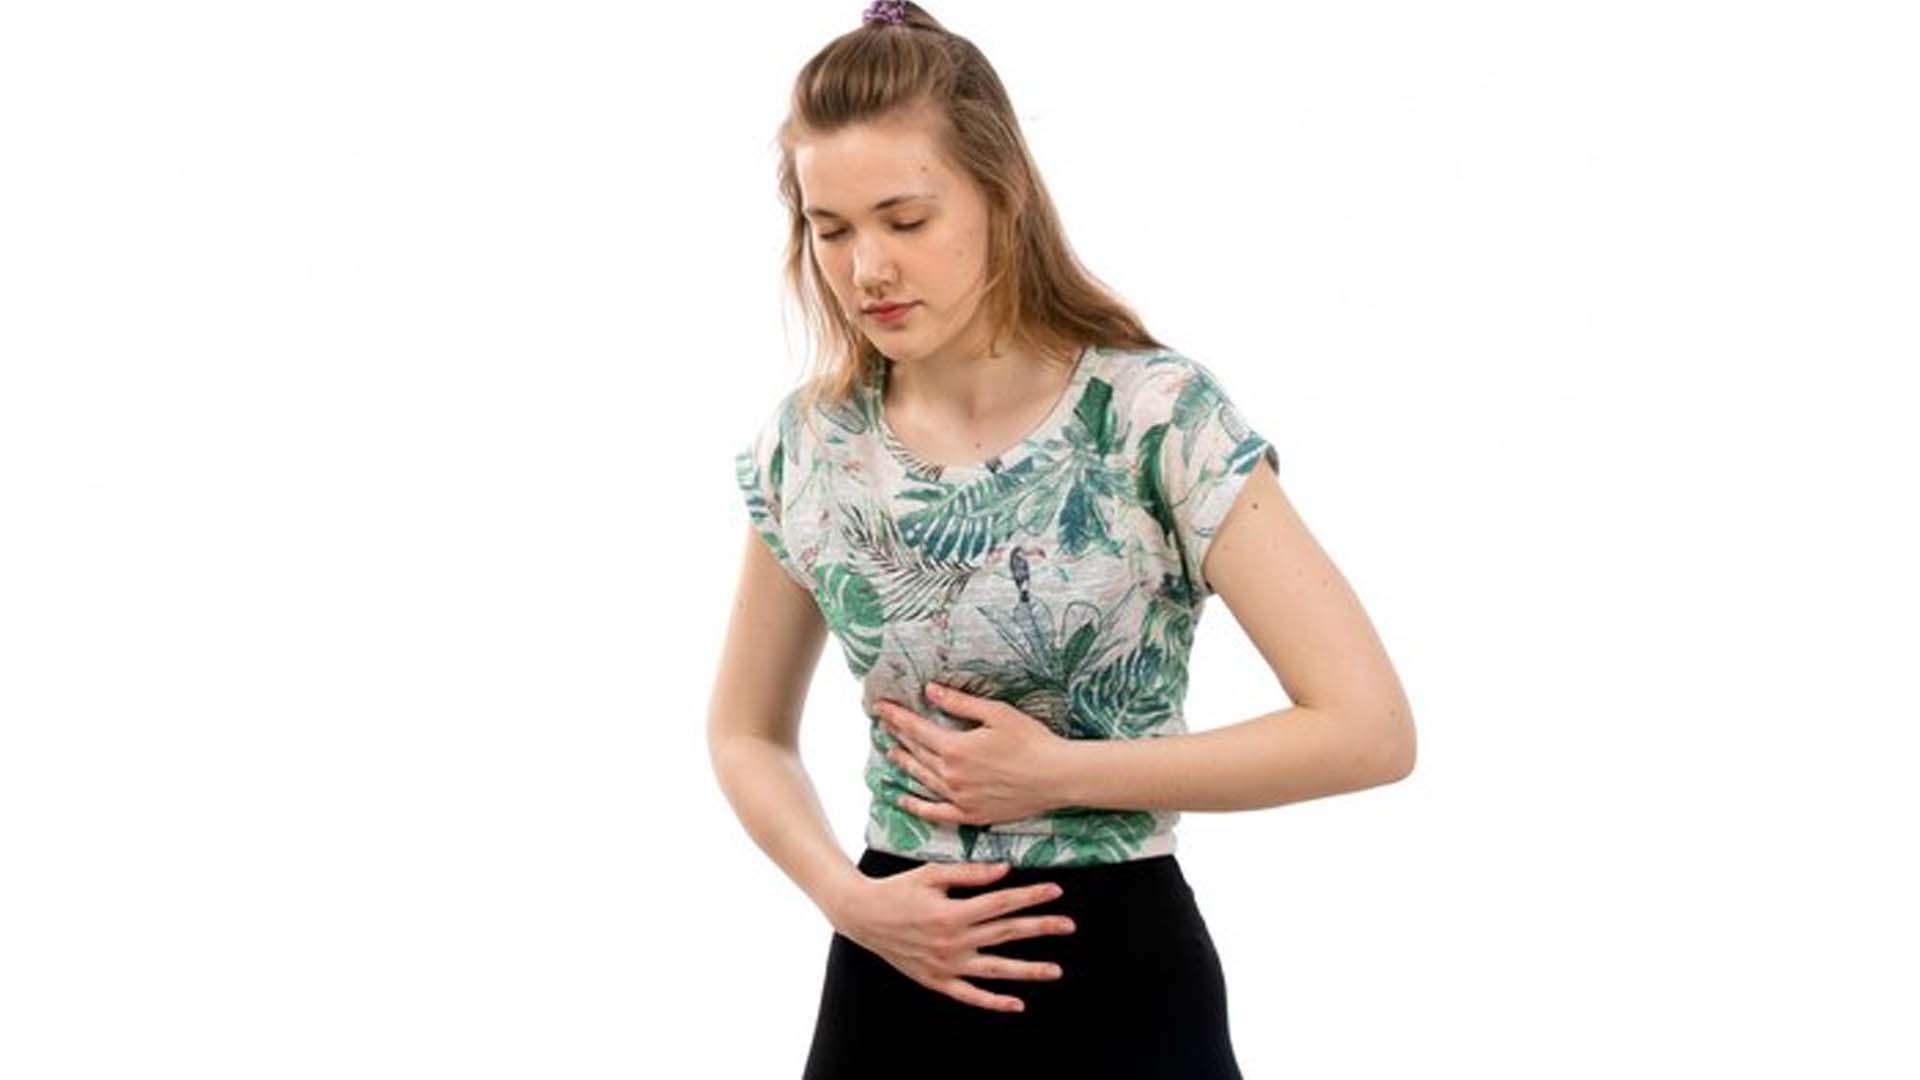 Digestive Problems in women